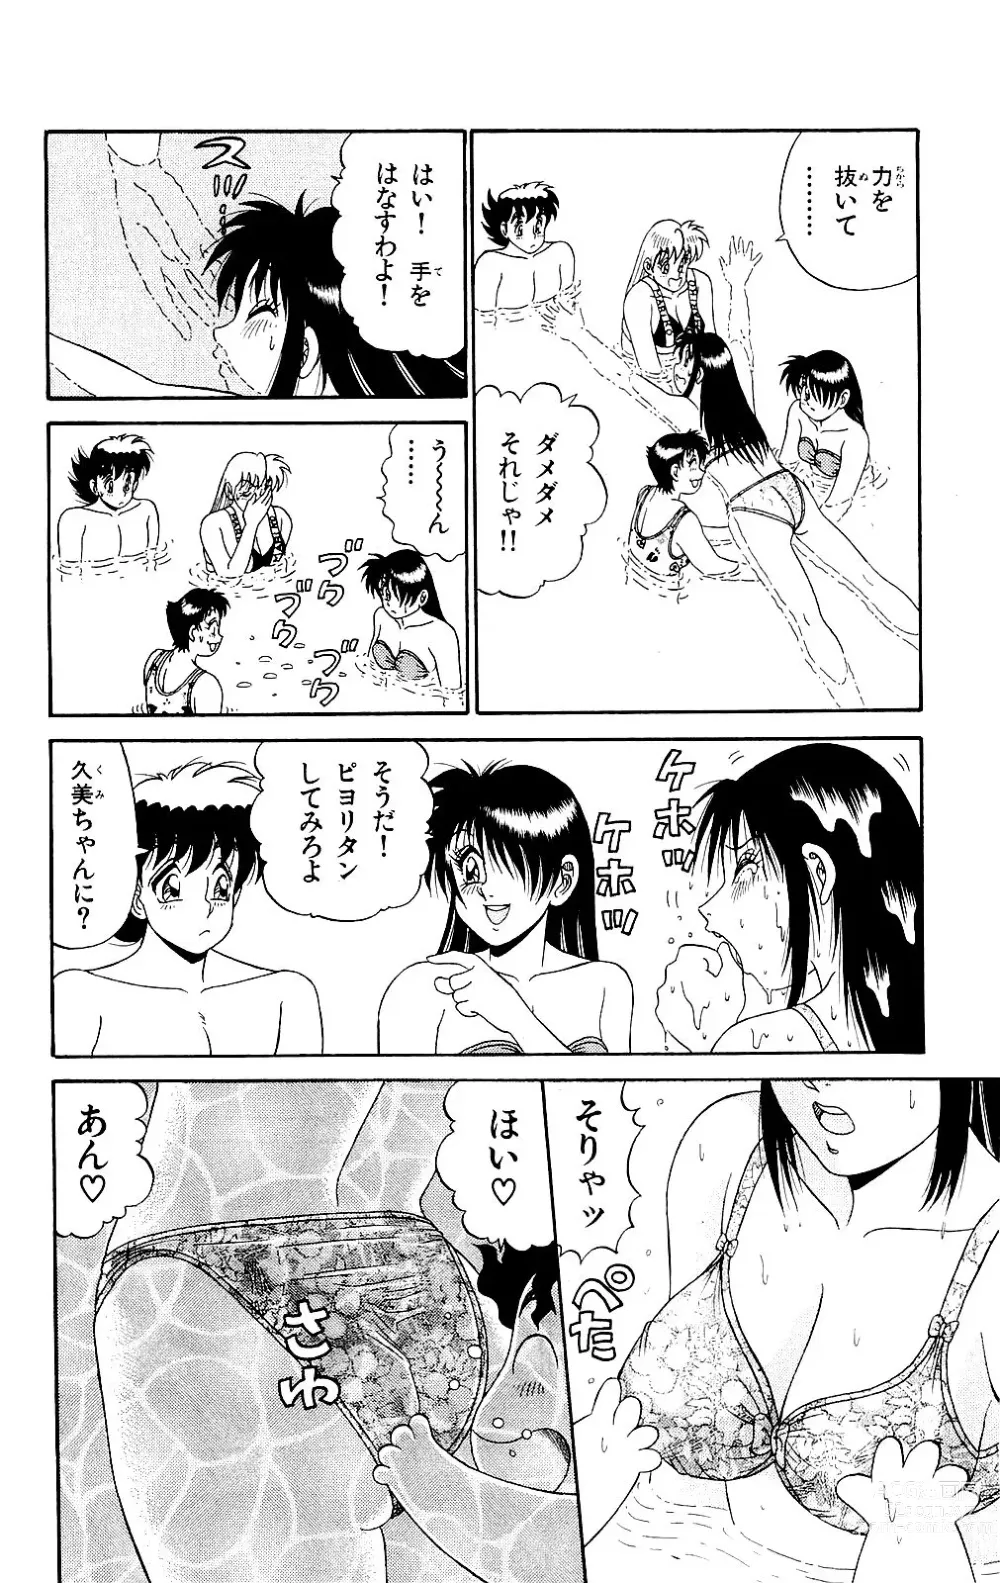 Page 16 of manga Orette Piyoritan 06